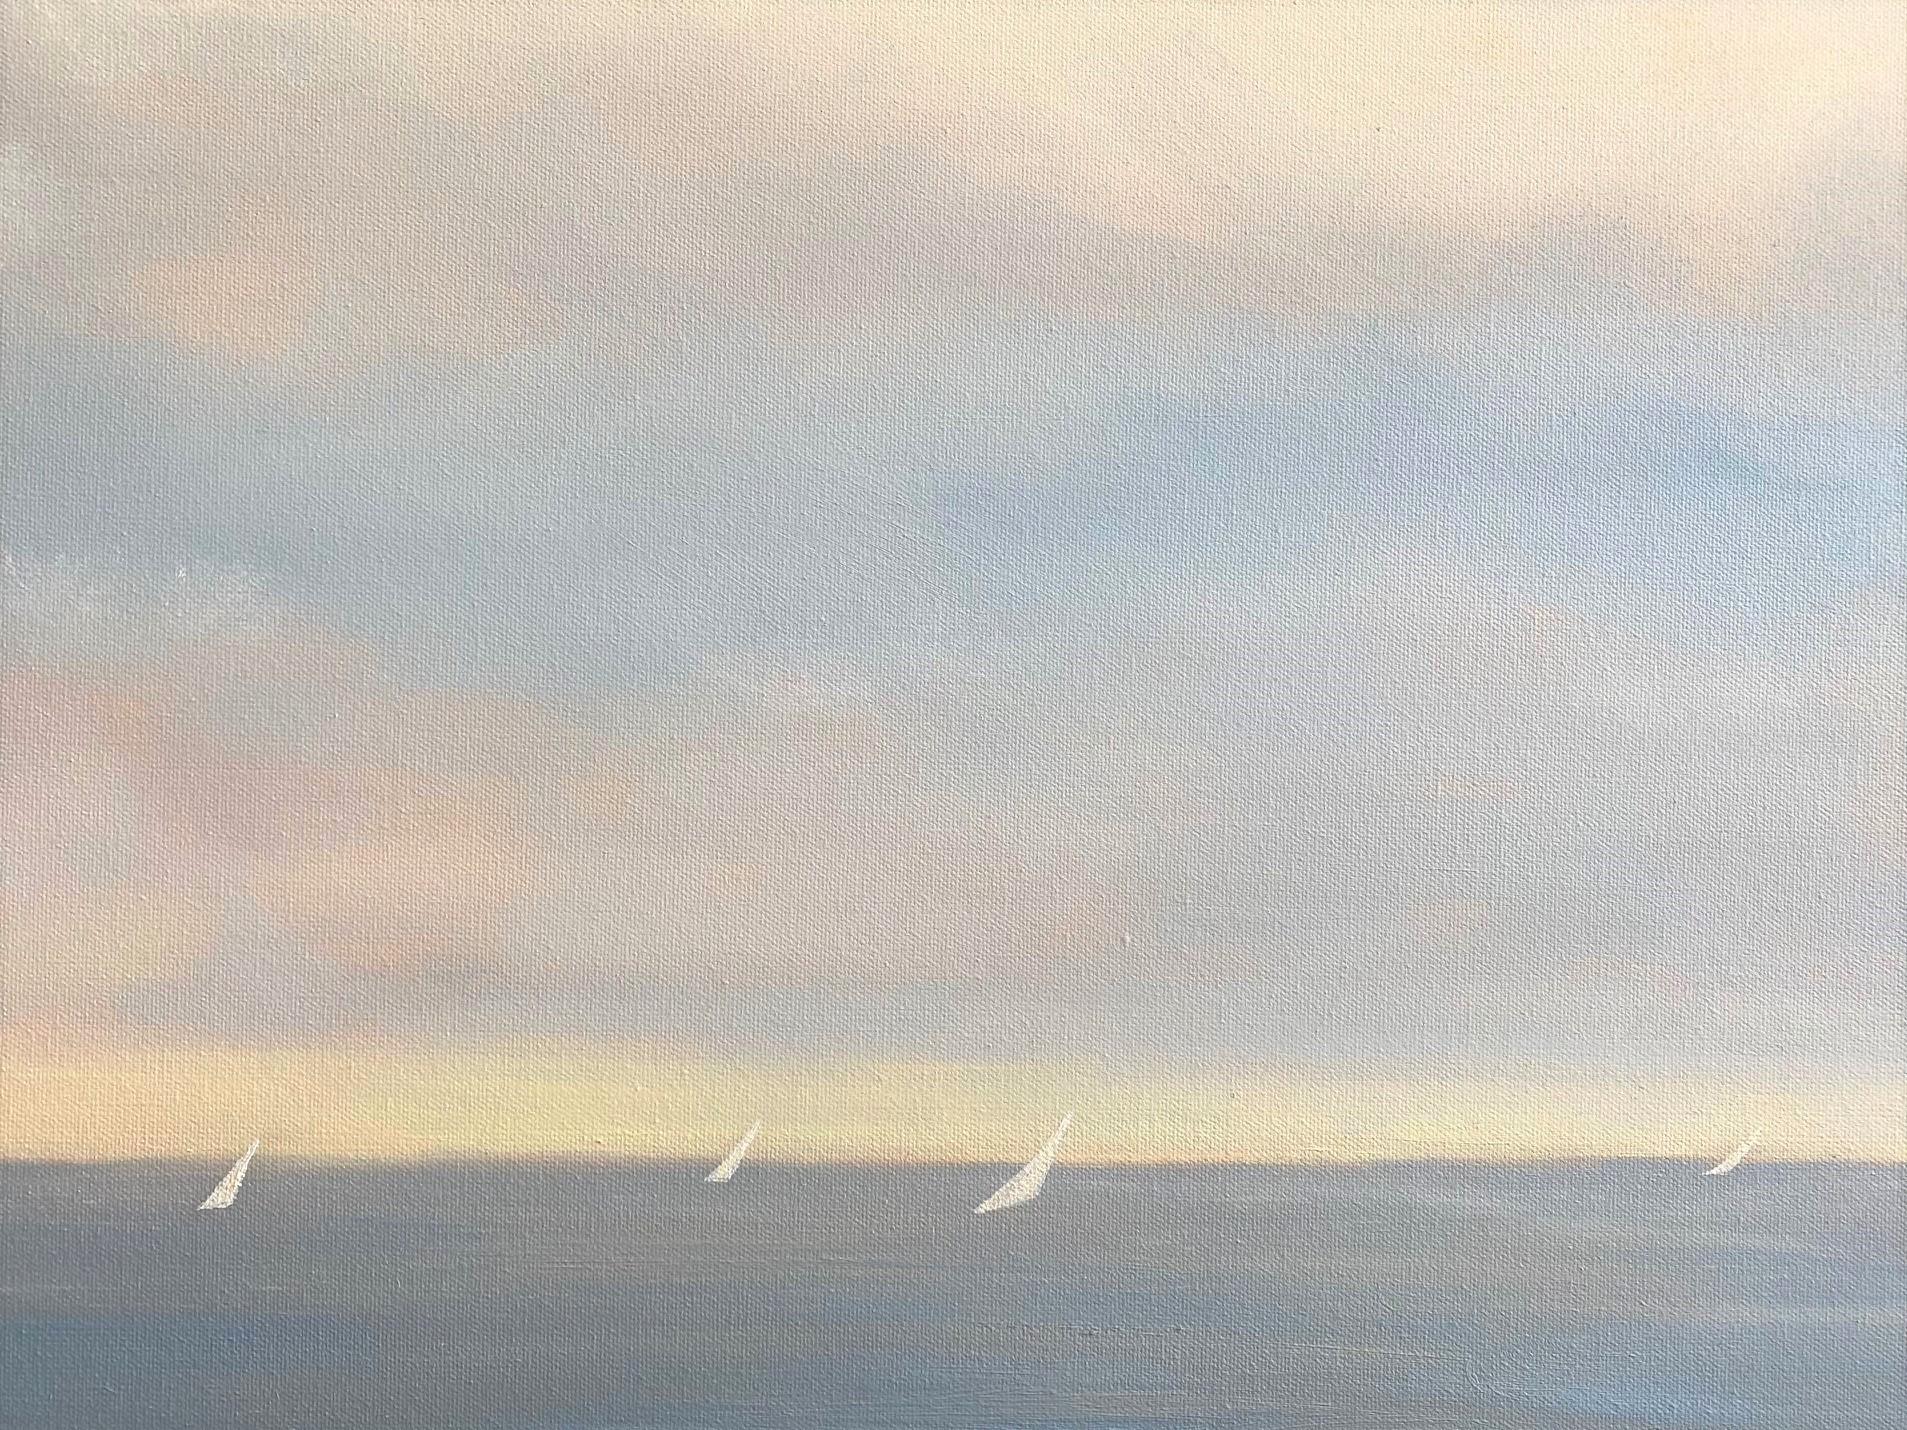 Soft Summer Skies, original 48x48 contemporary impressionist marine landscape 2